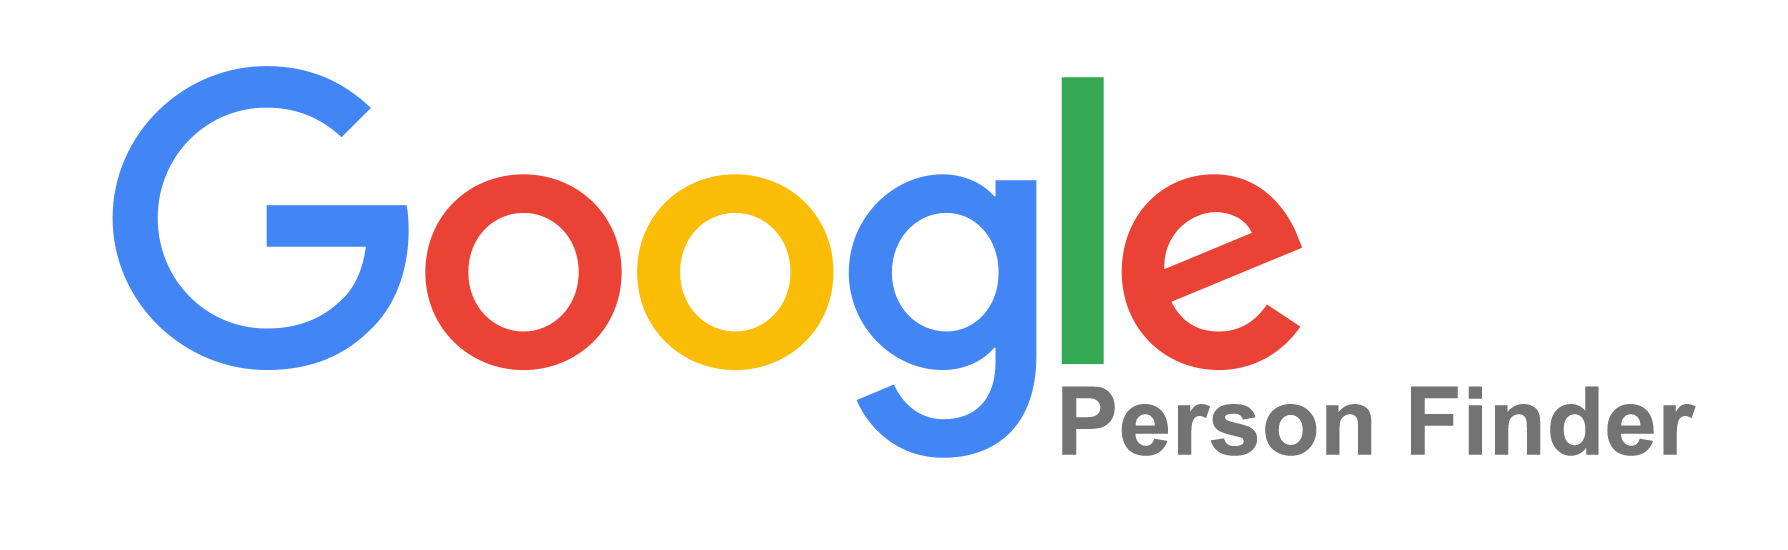 Google Person Finde